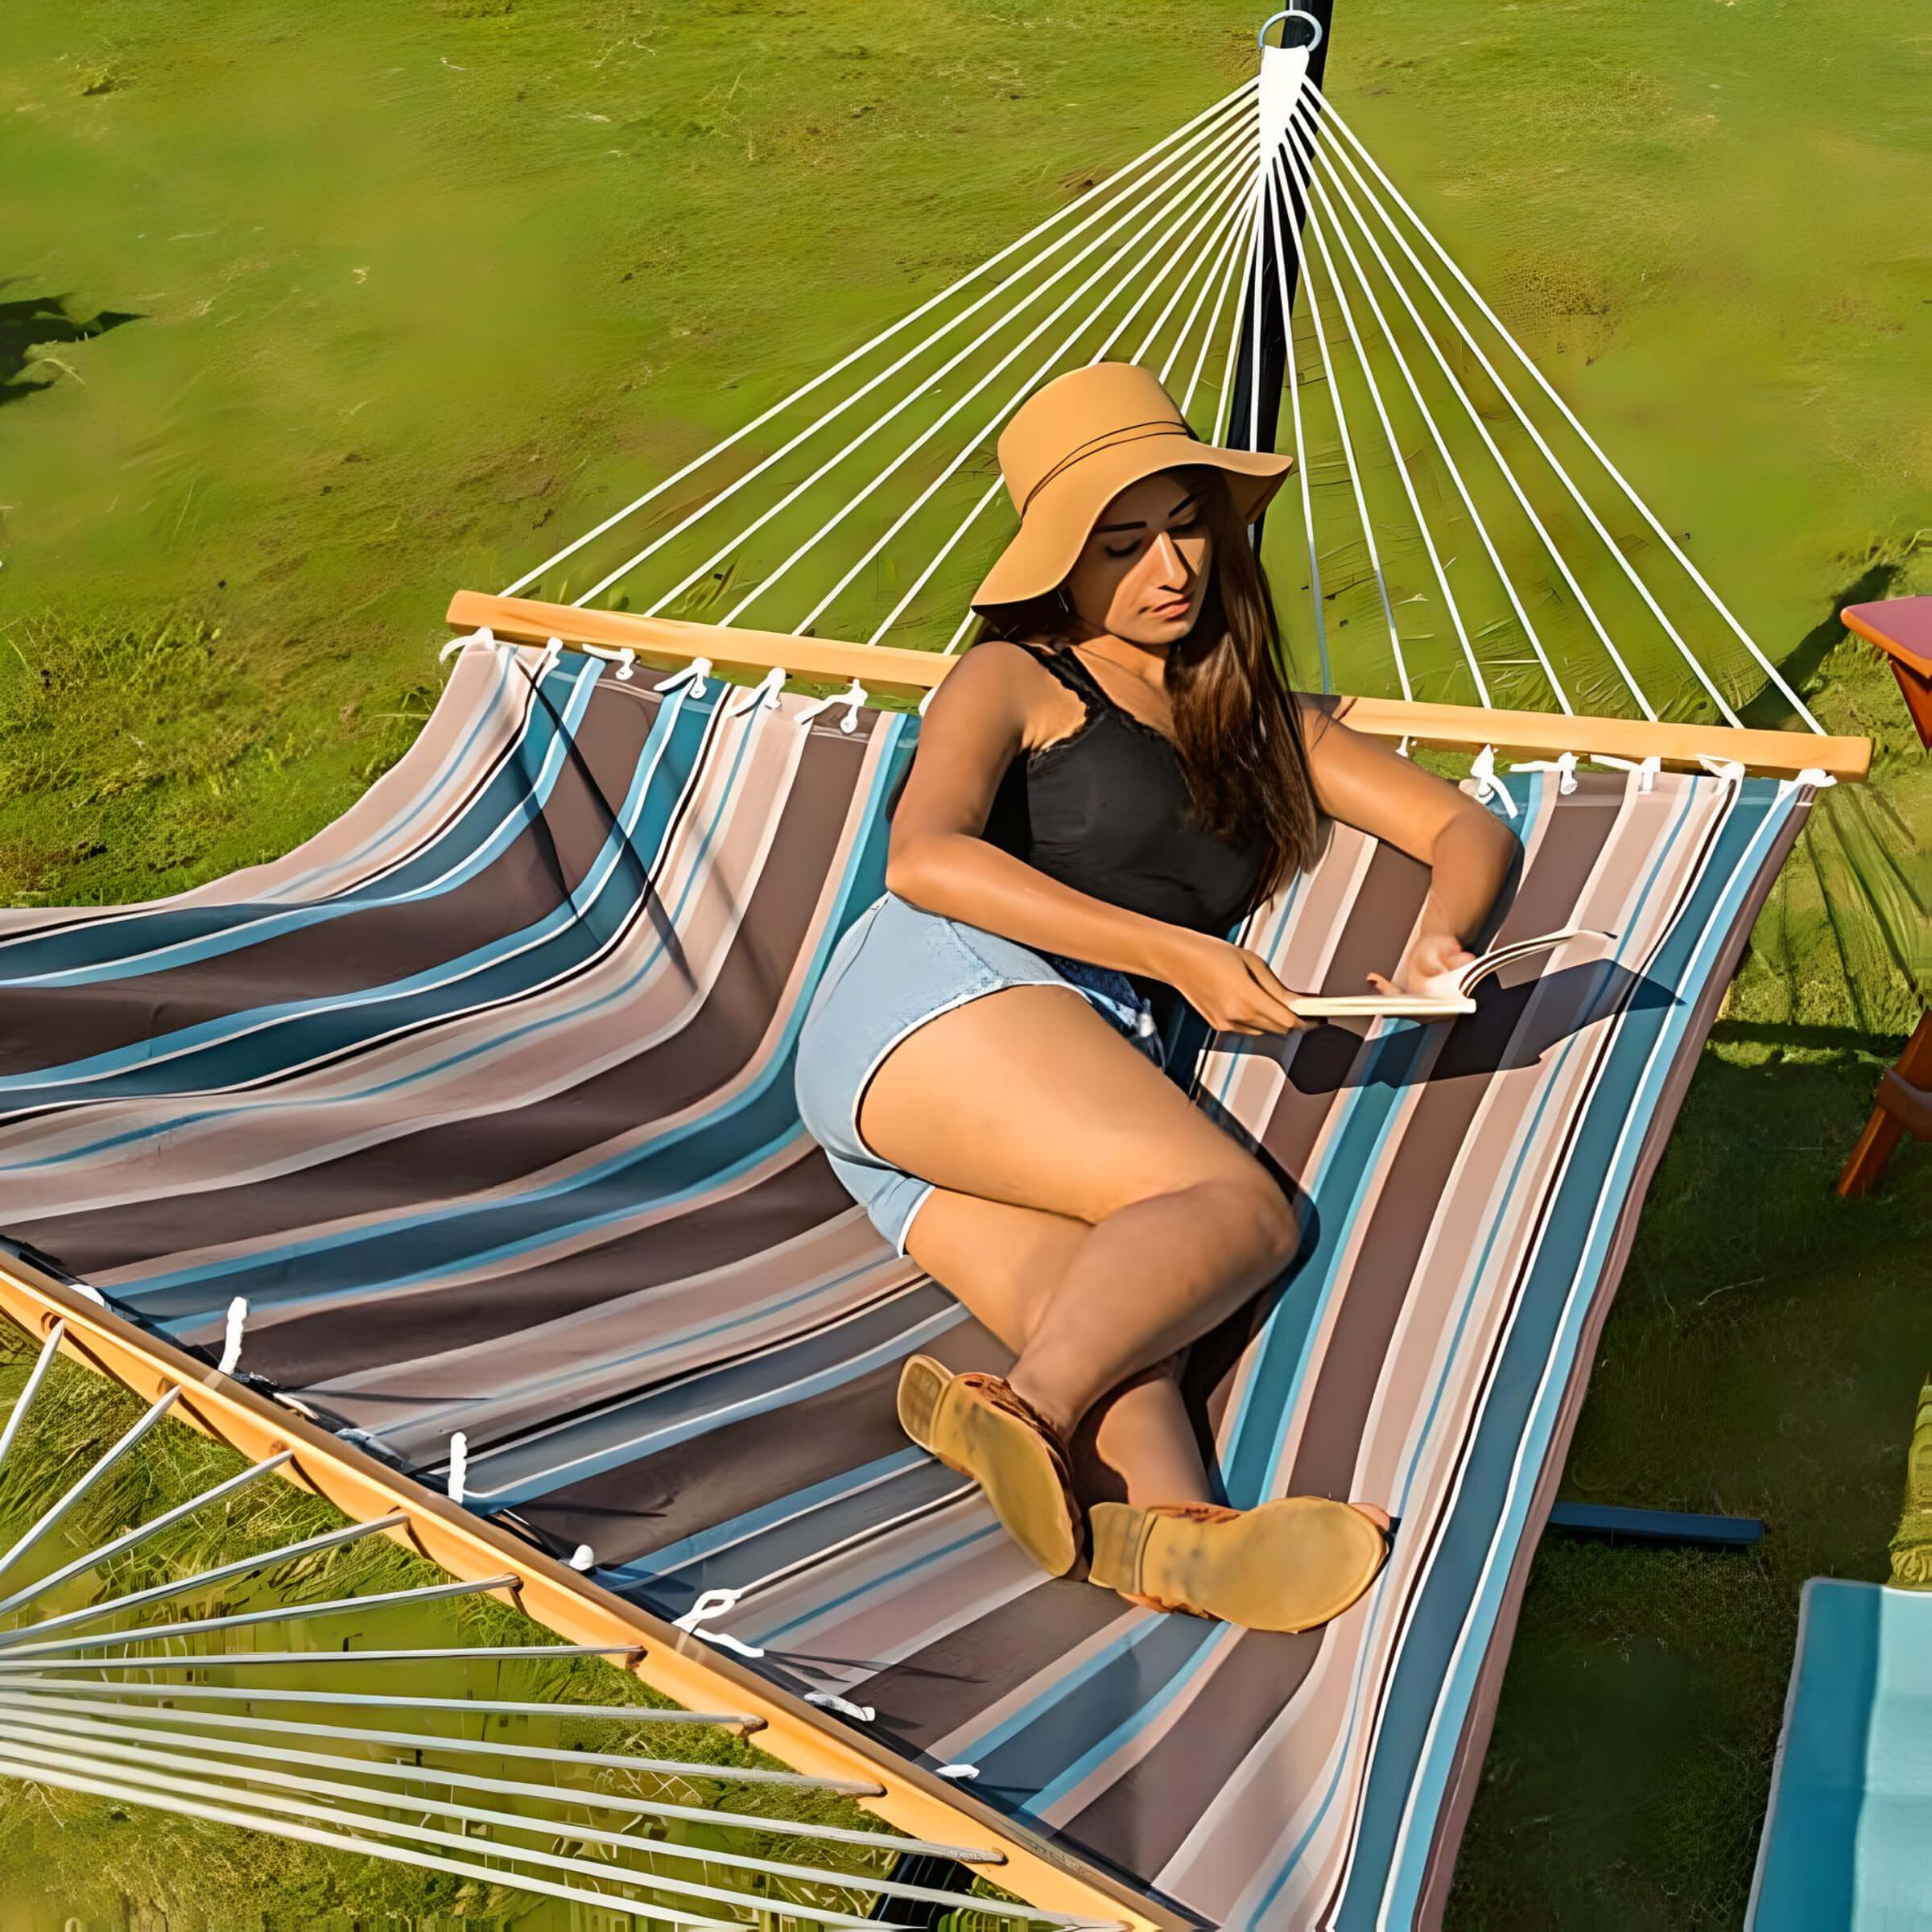 pool-side-hammock-girl-laying-in-hammock